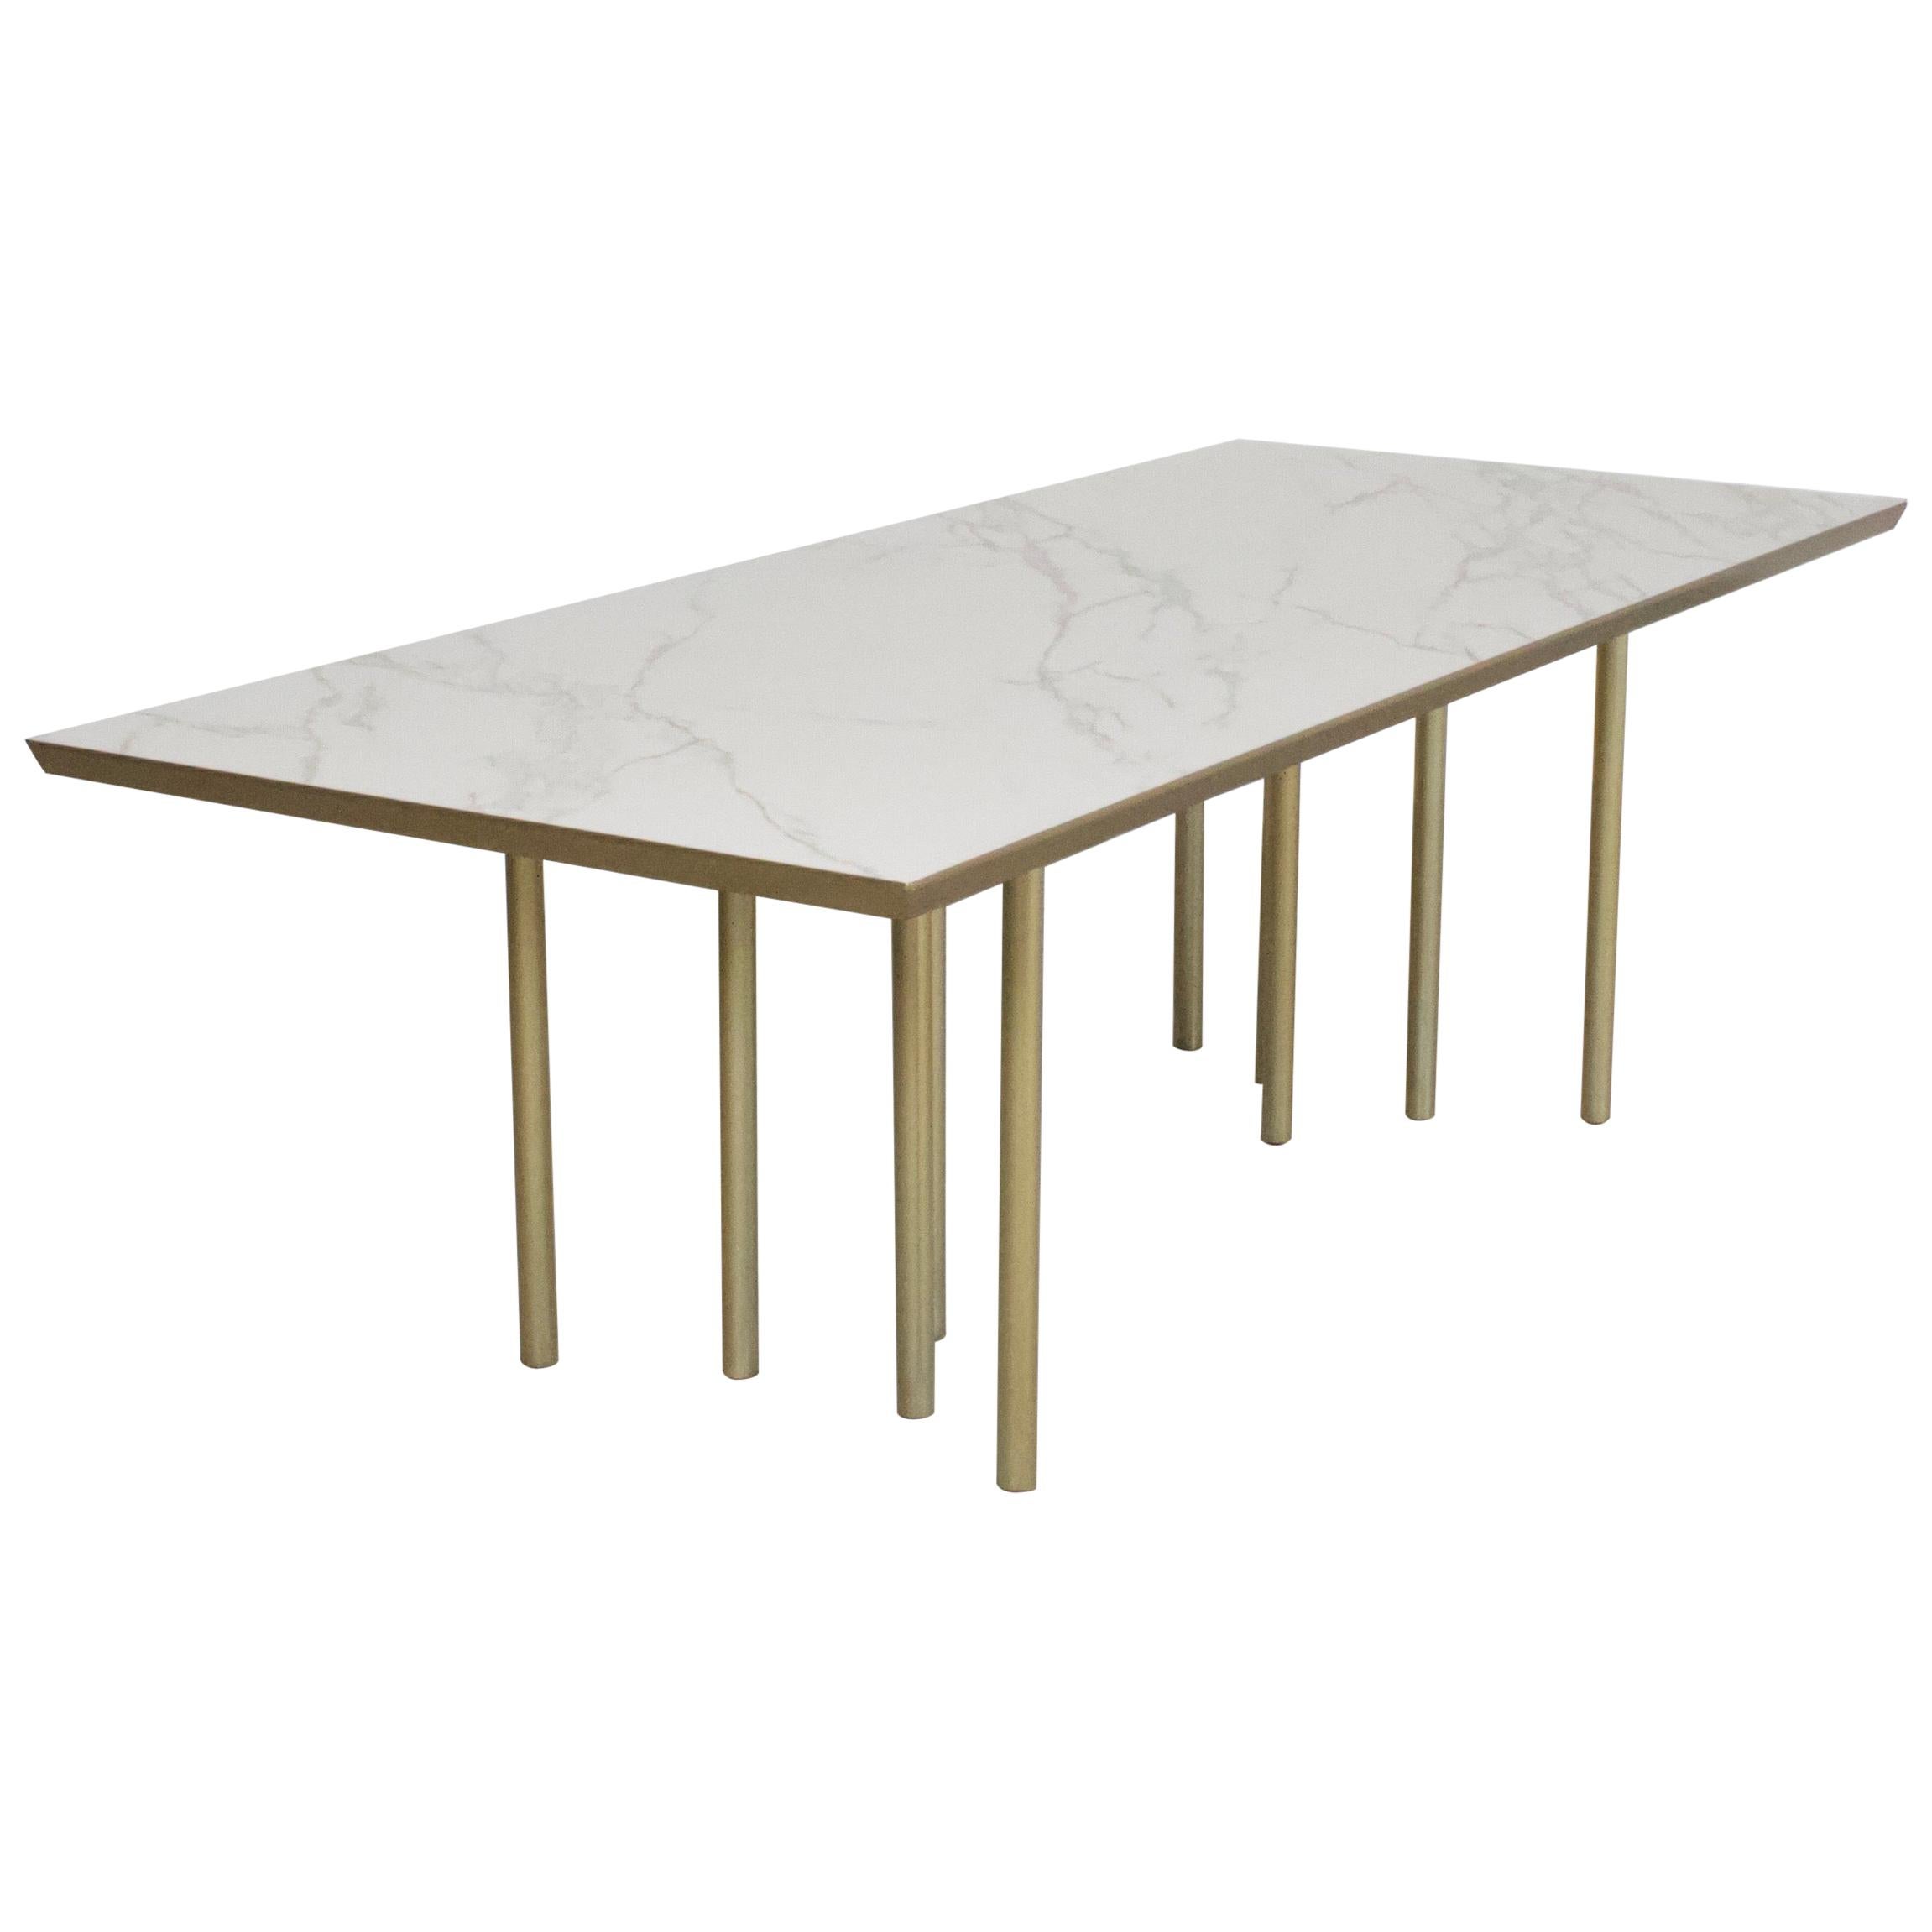 Impressive Contemporary 'Alta Ara' Table by Bes Merckx  For Sale